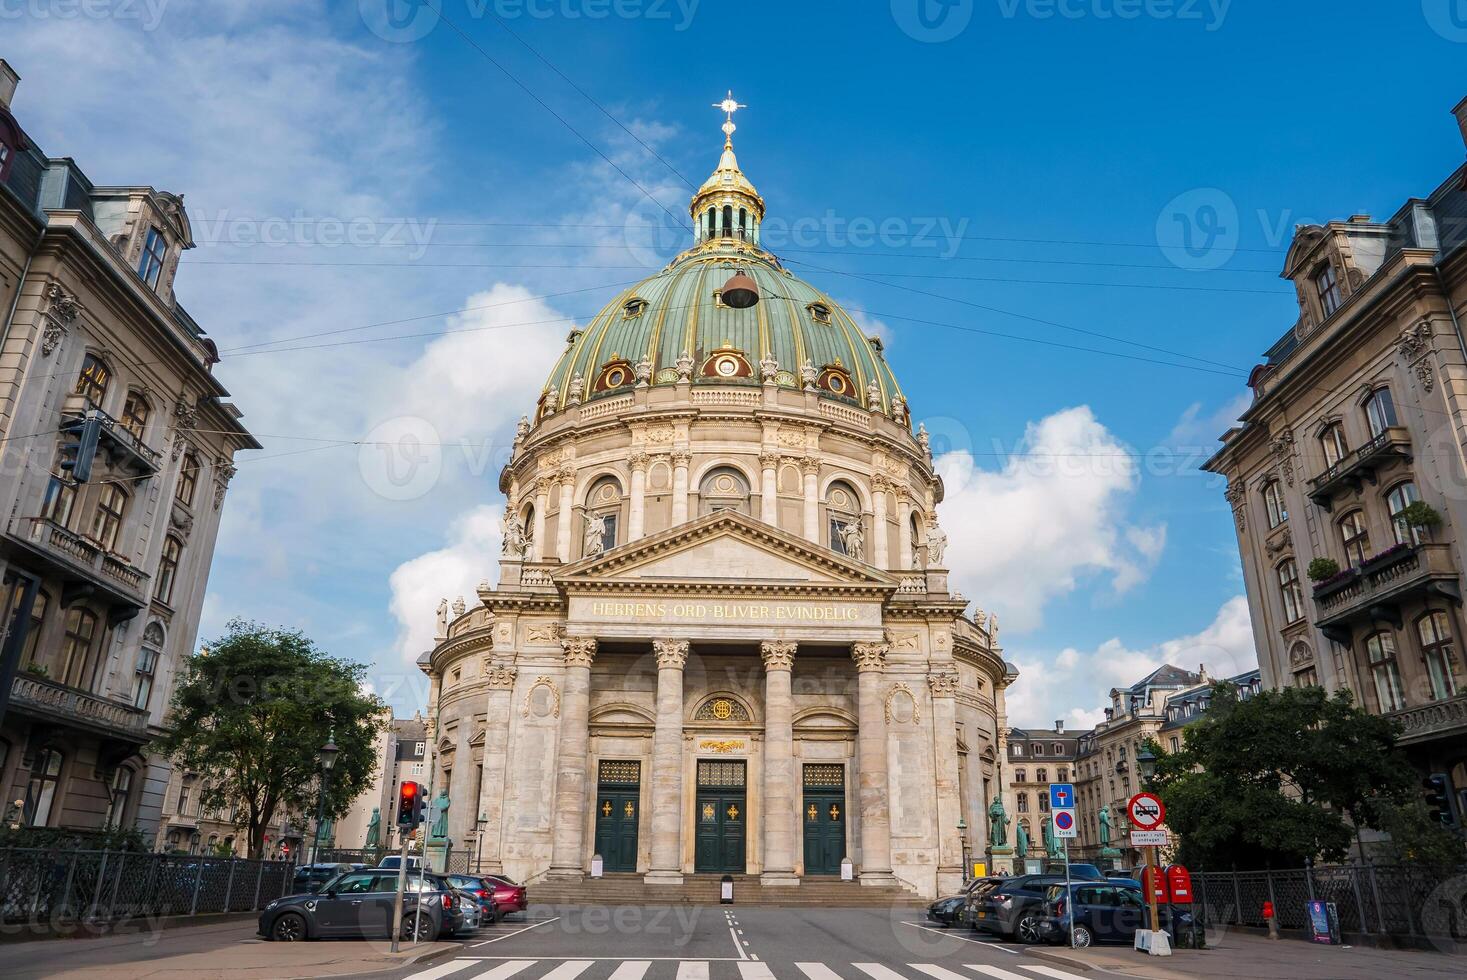 Frederik's Church with Copper Dome on Cloudy Day, Copenhagen Denmark photo